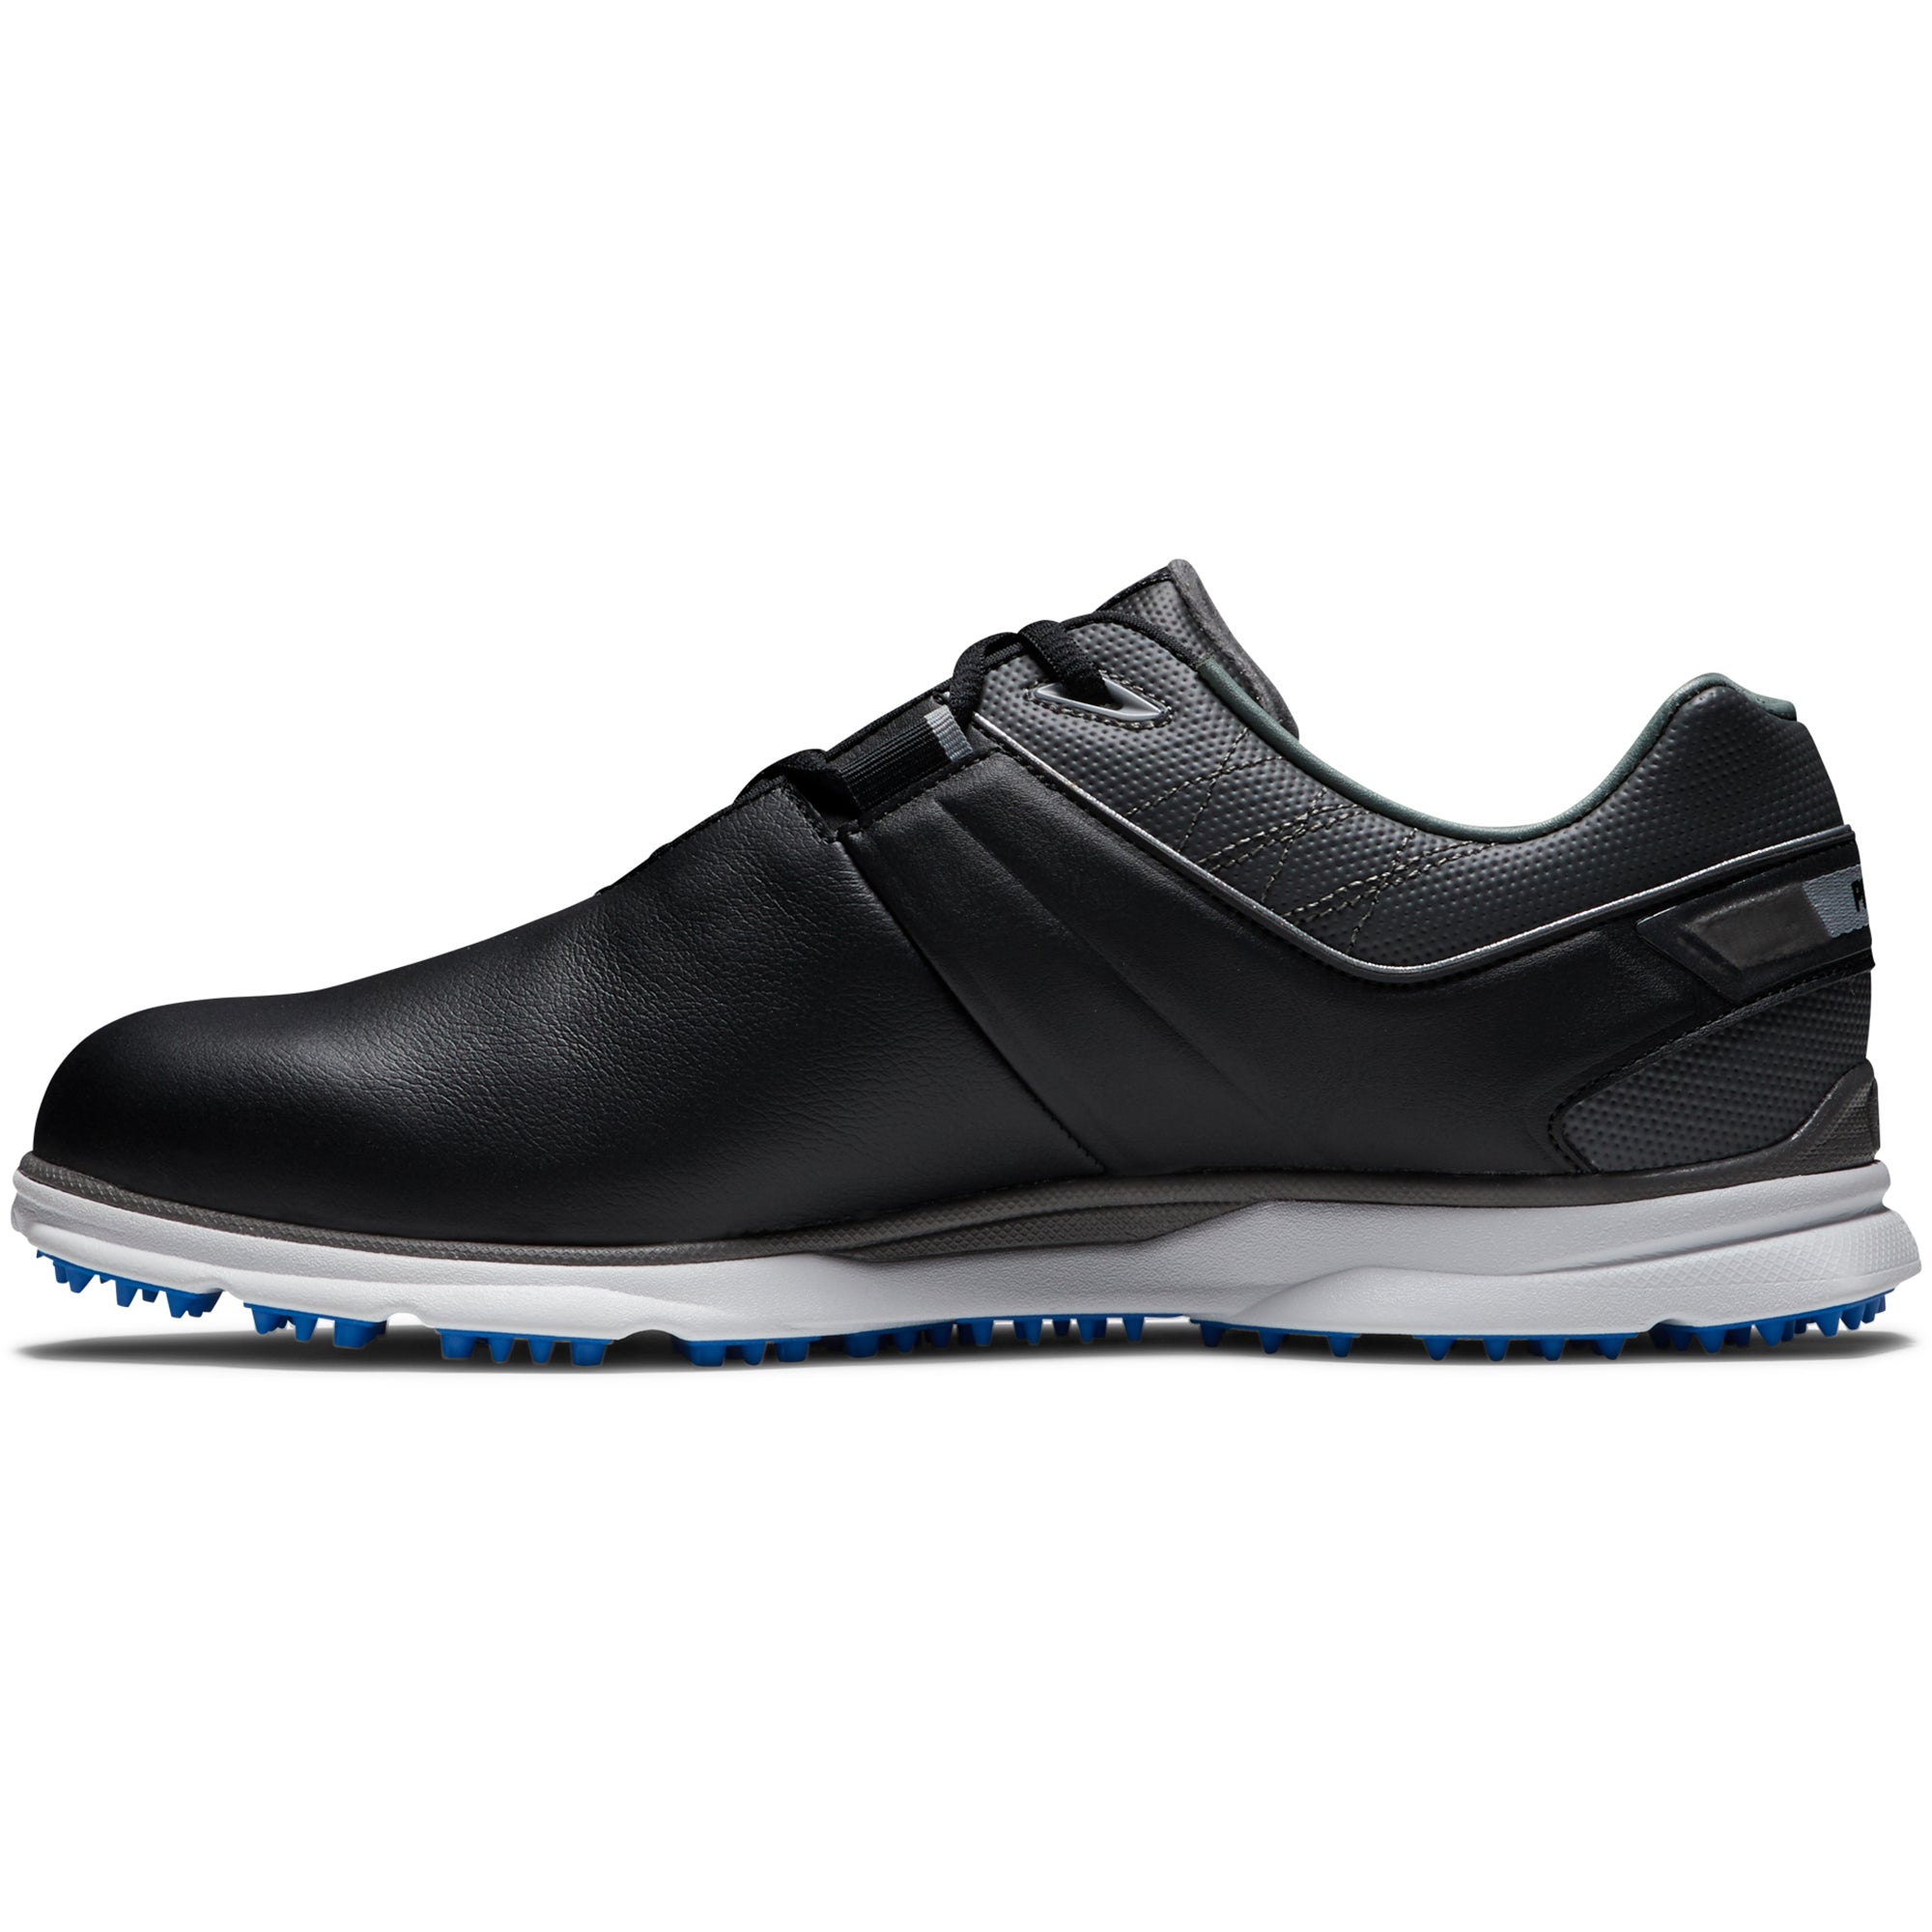 footjoy-pro-sl-golf-shoes-53077-black-charcoal